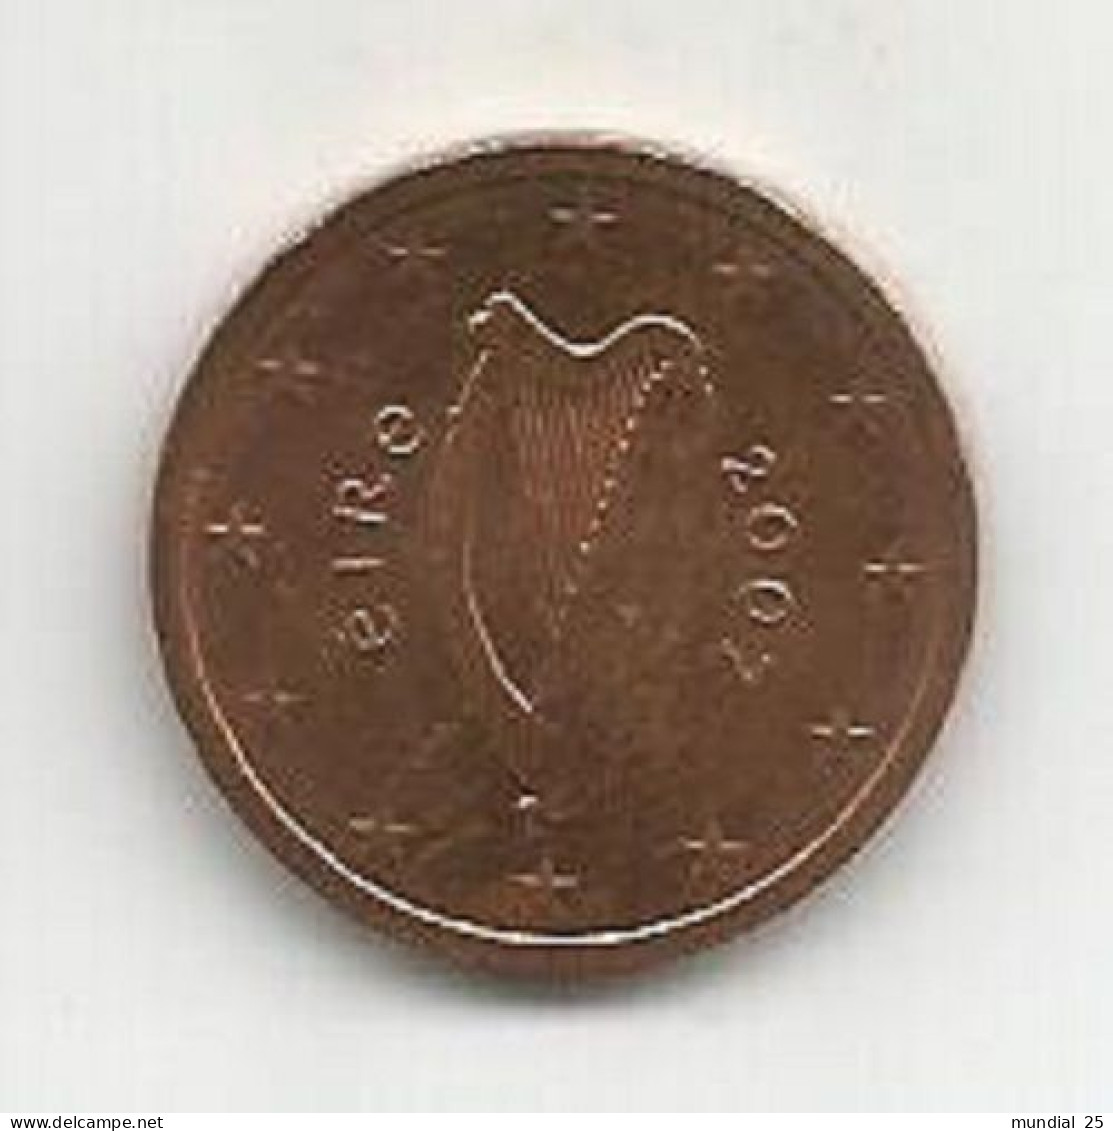 IRELAND 2 EURO CENT 2007 - Irland